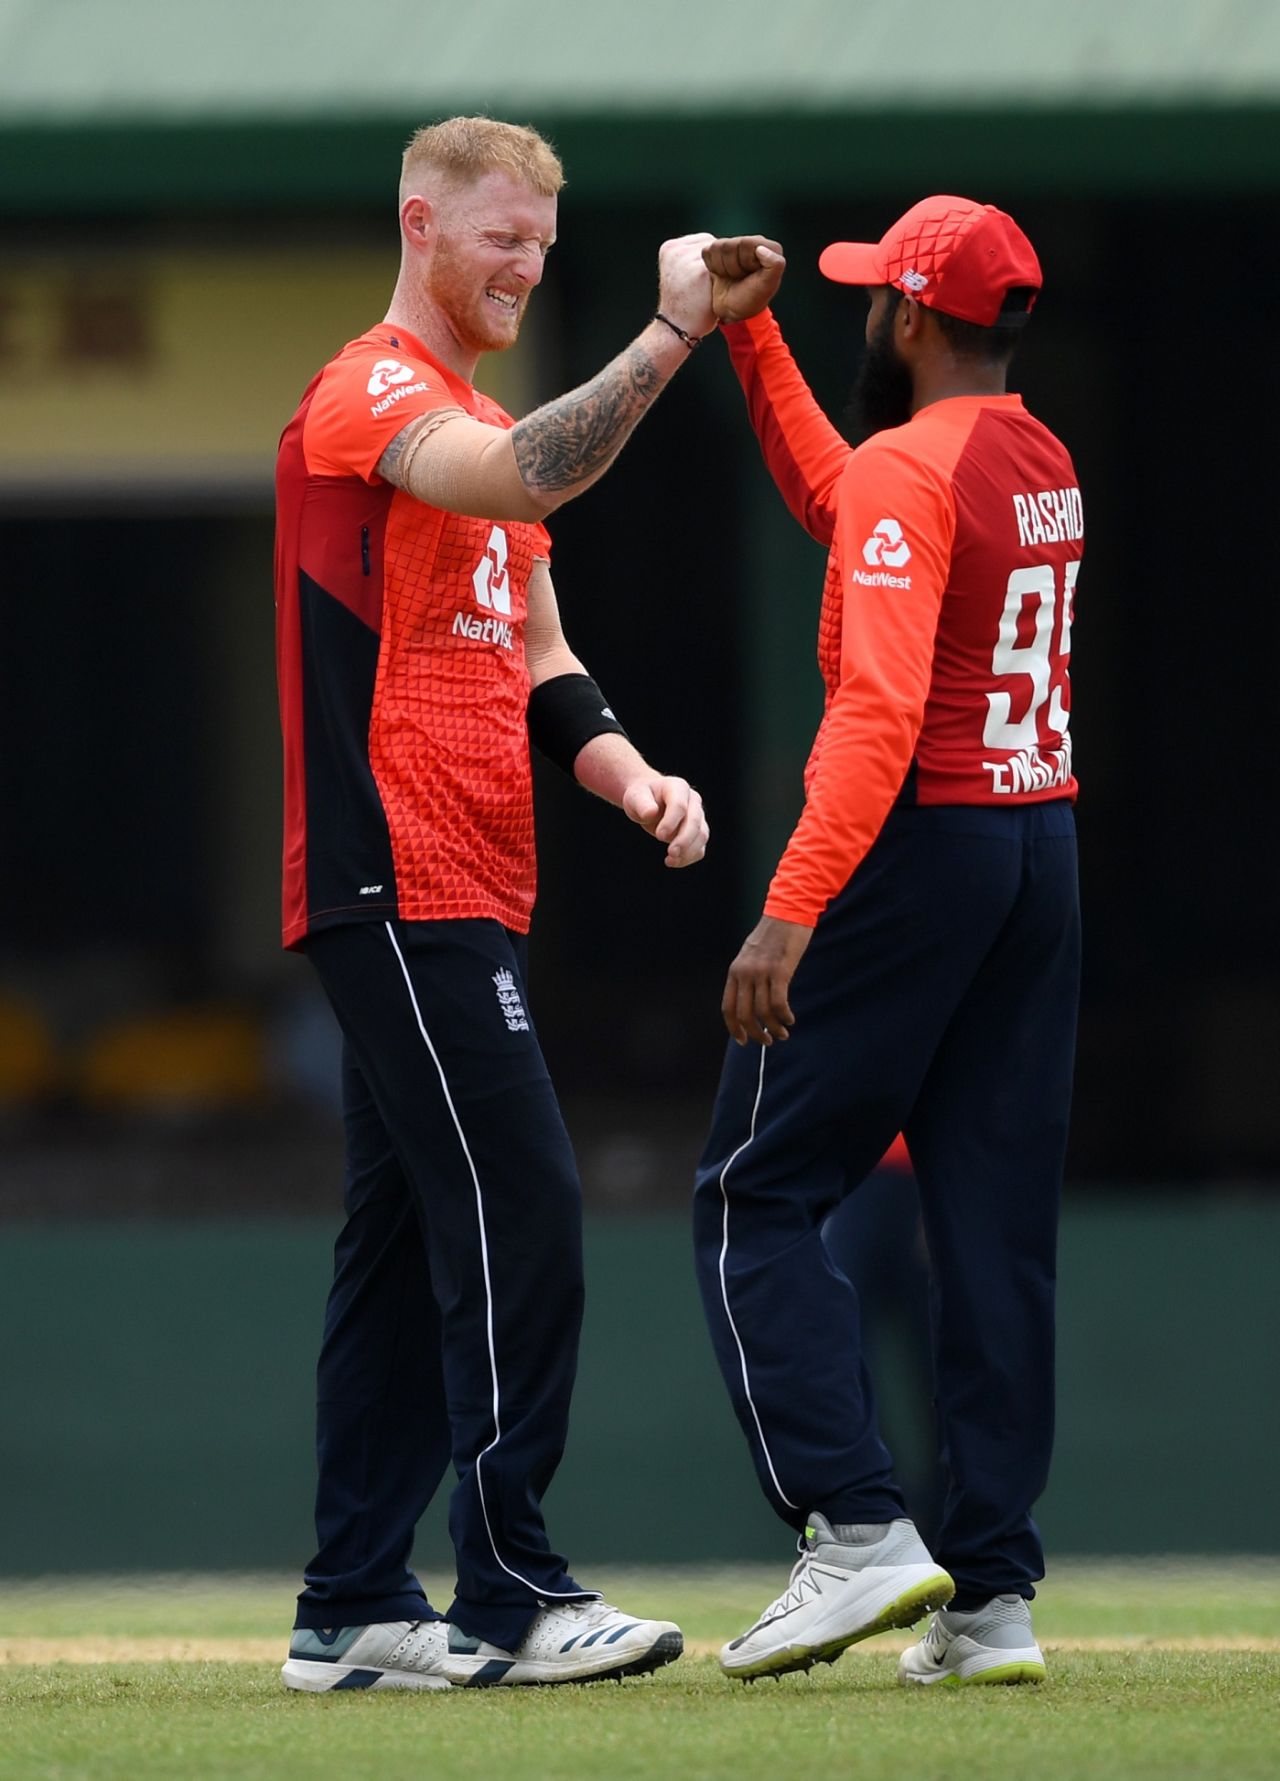 Ben Stokes celebrates a wicket with Adil Rashid, Sri Lanka Board XI v England, tour match, P Sara Oval, October 5, 2018